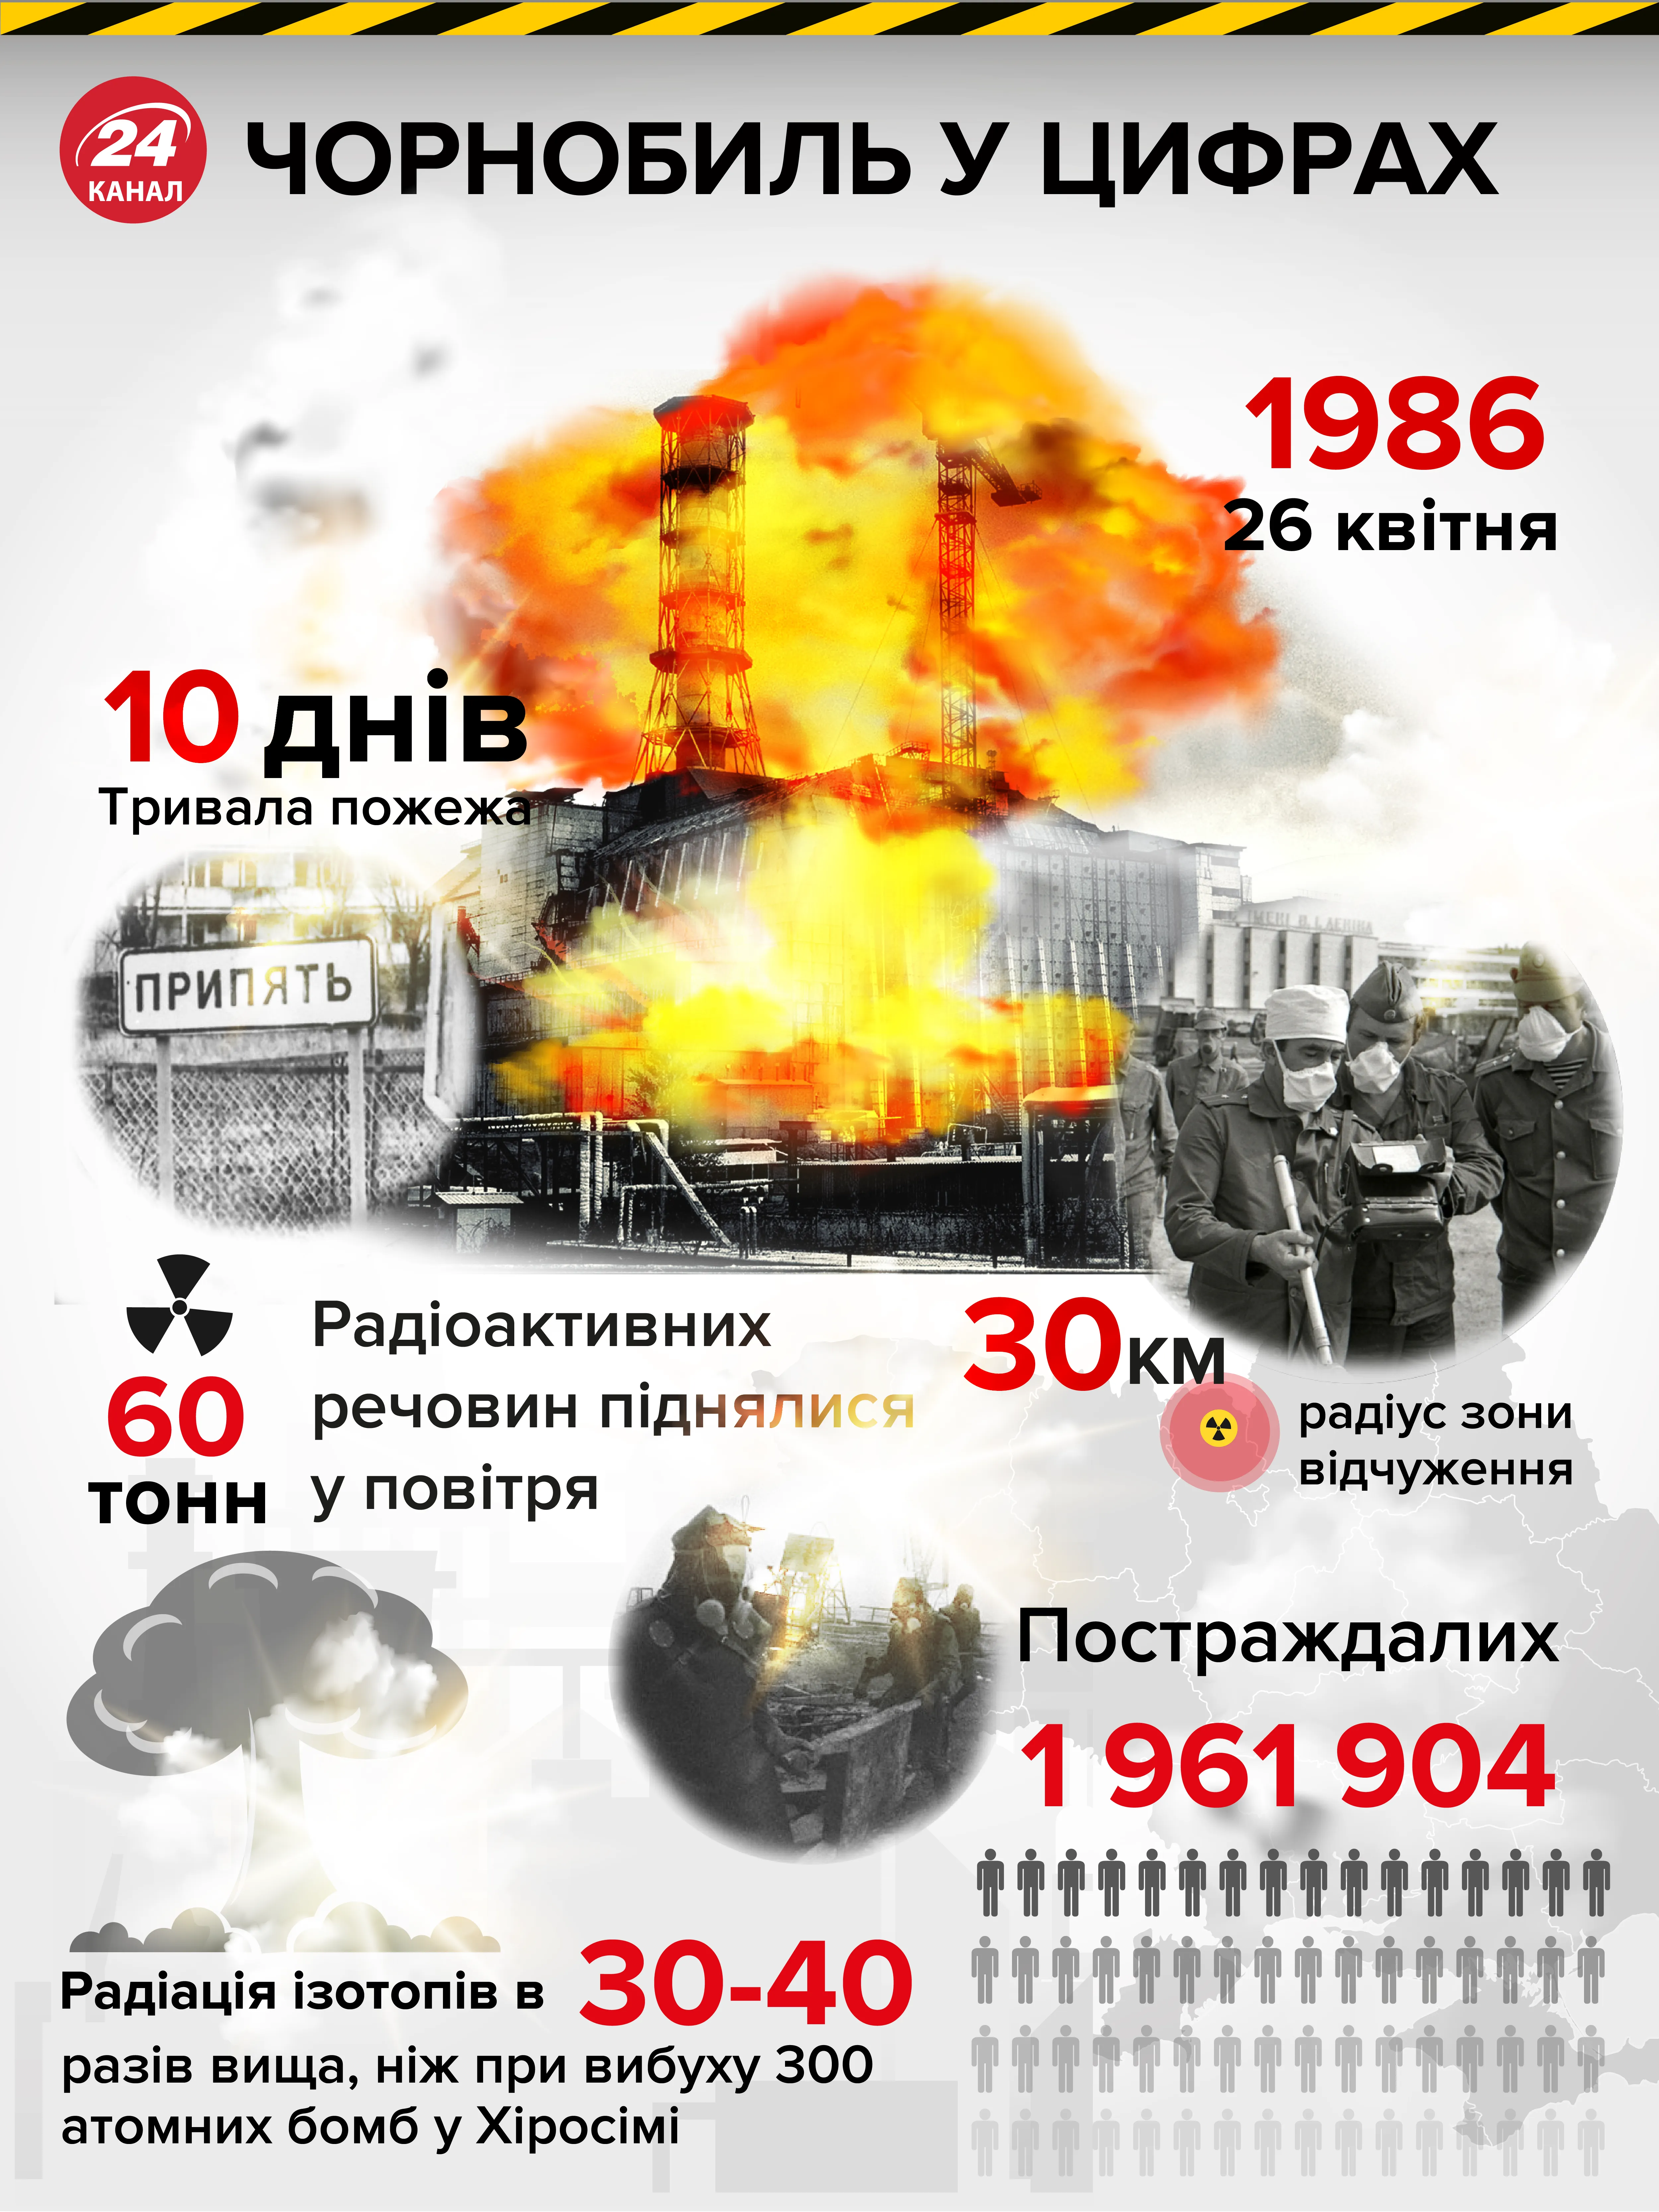 Чорнобиль, чорнобильська катастрофа, аварія на ЧАЕС